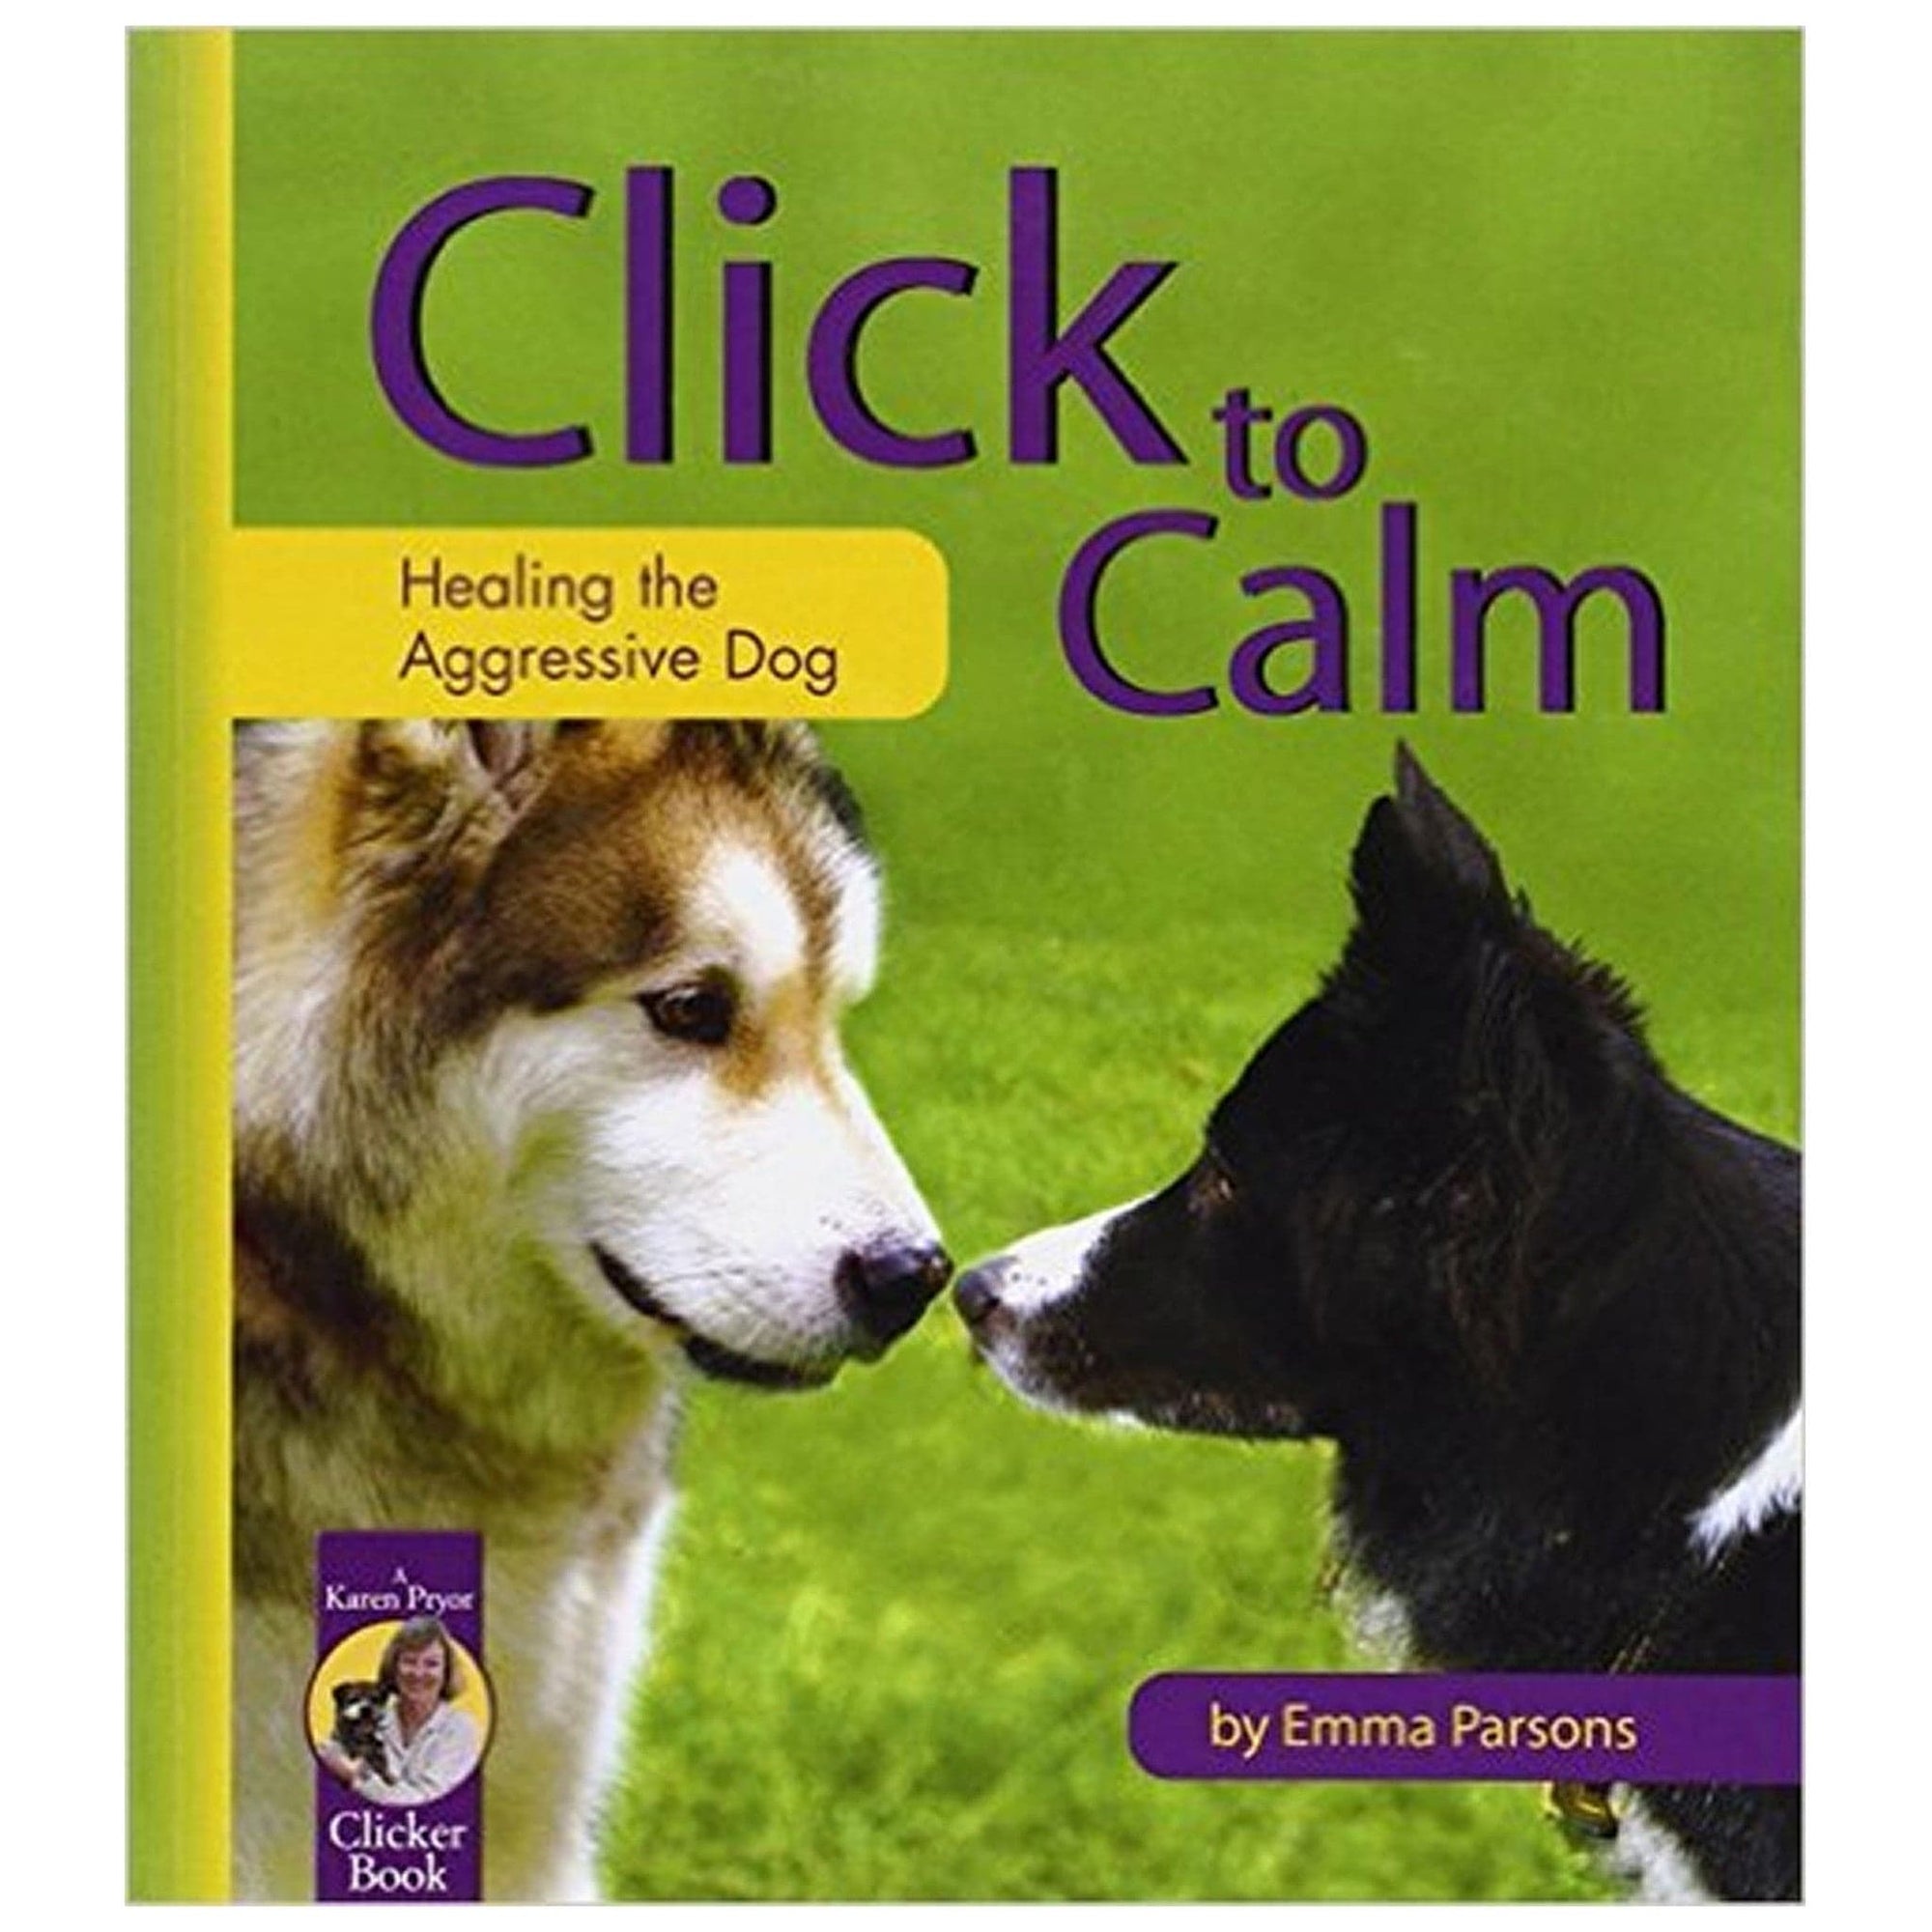 Clicker Training 101 - Whole Dog Journal